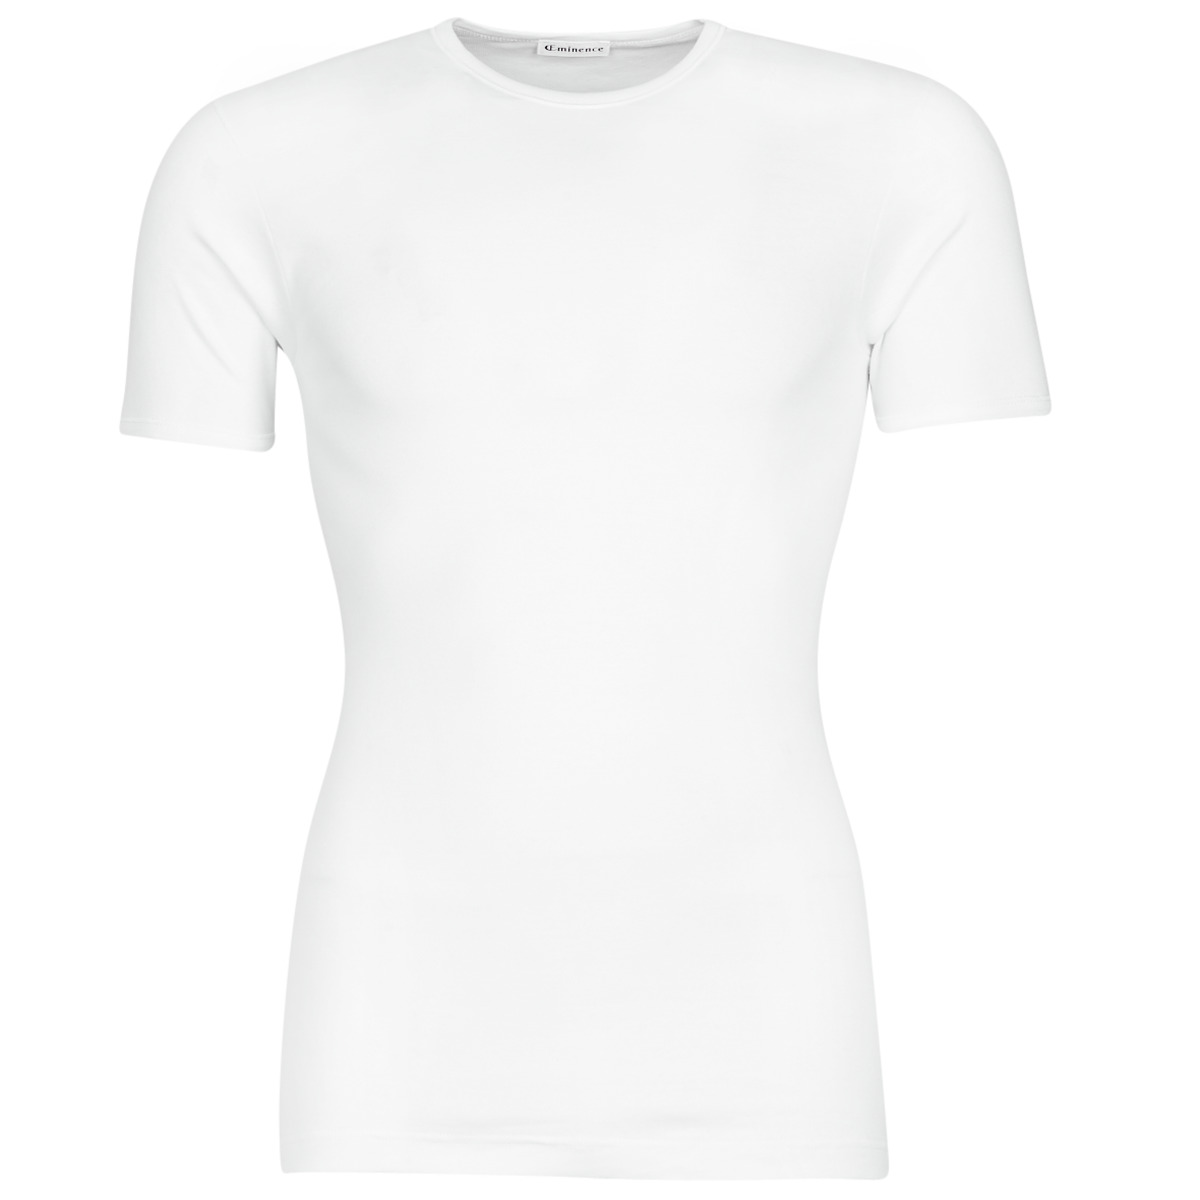 Kleidung Herren T-Shirts Eminence 308-0001 Weiss